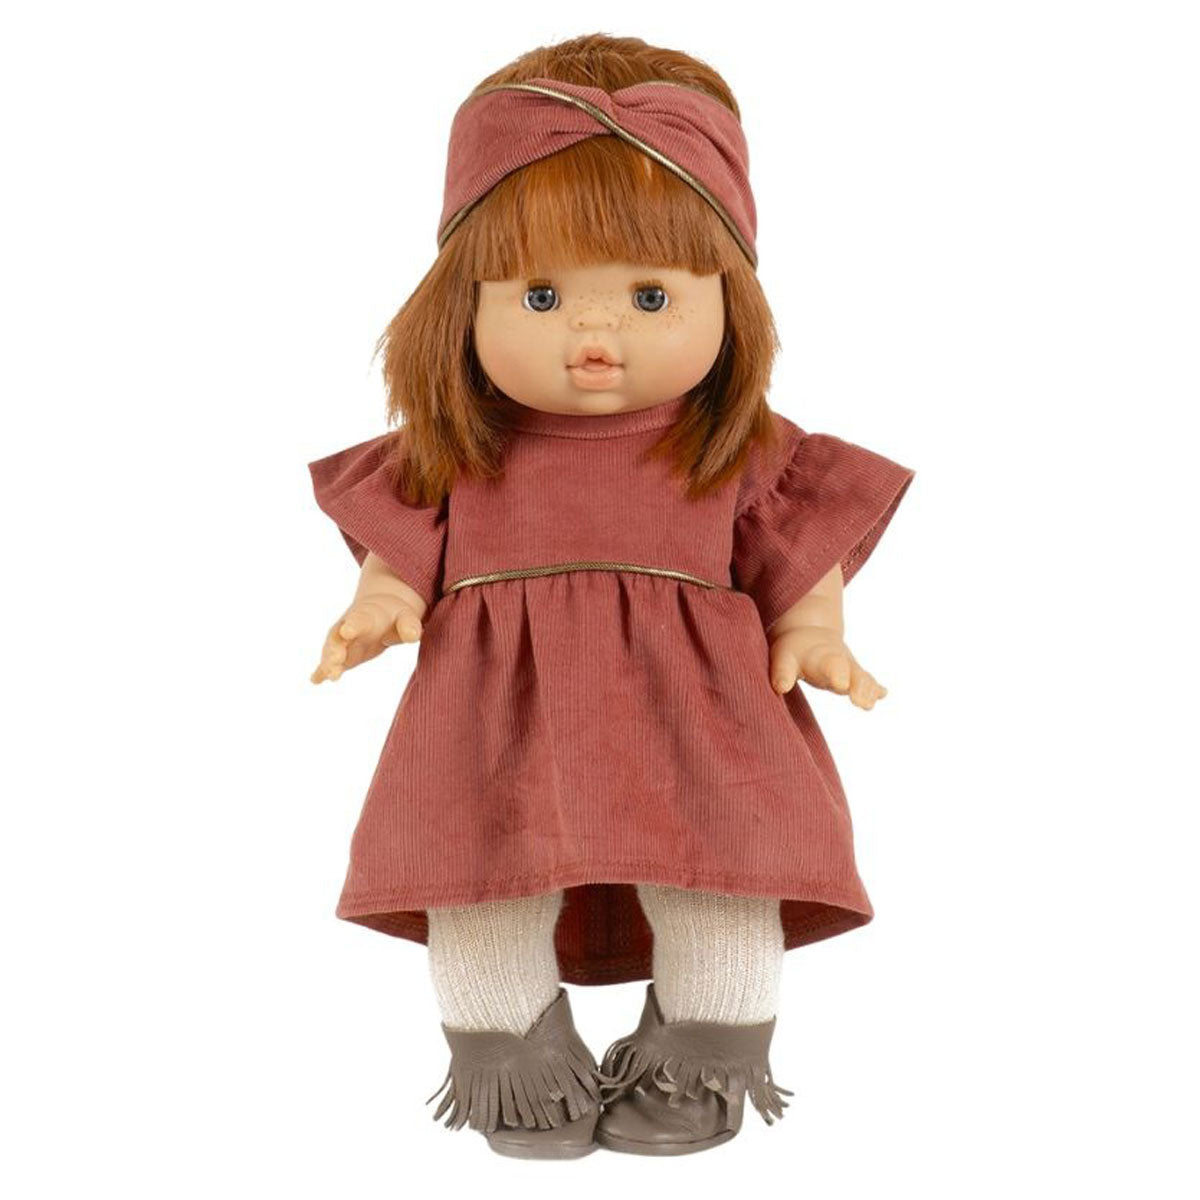 Doll wearing Minikane Doll Clothing - Daisy Dress and Headband Set - Marsala Milleraies with Golden Piping